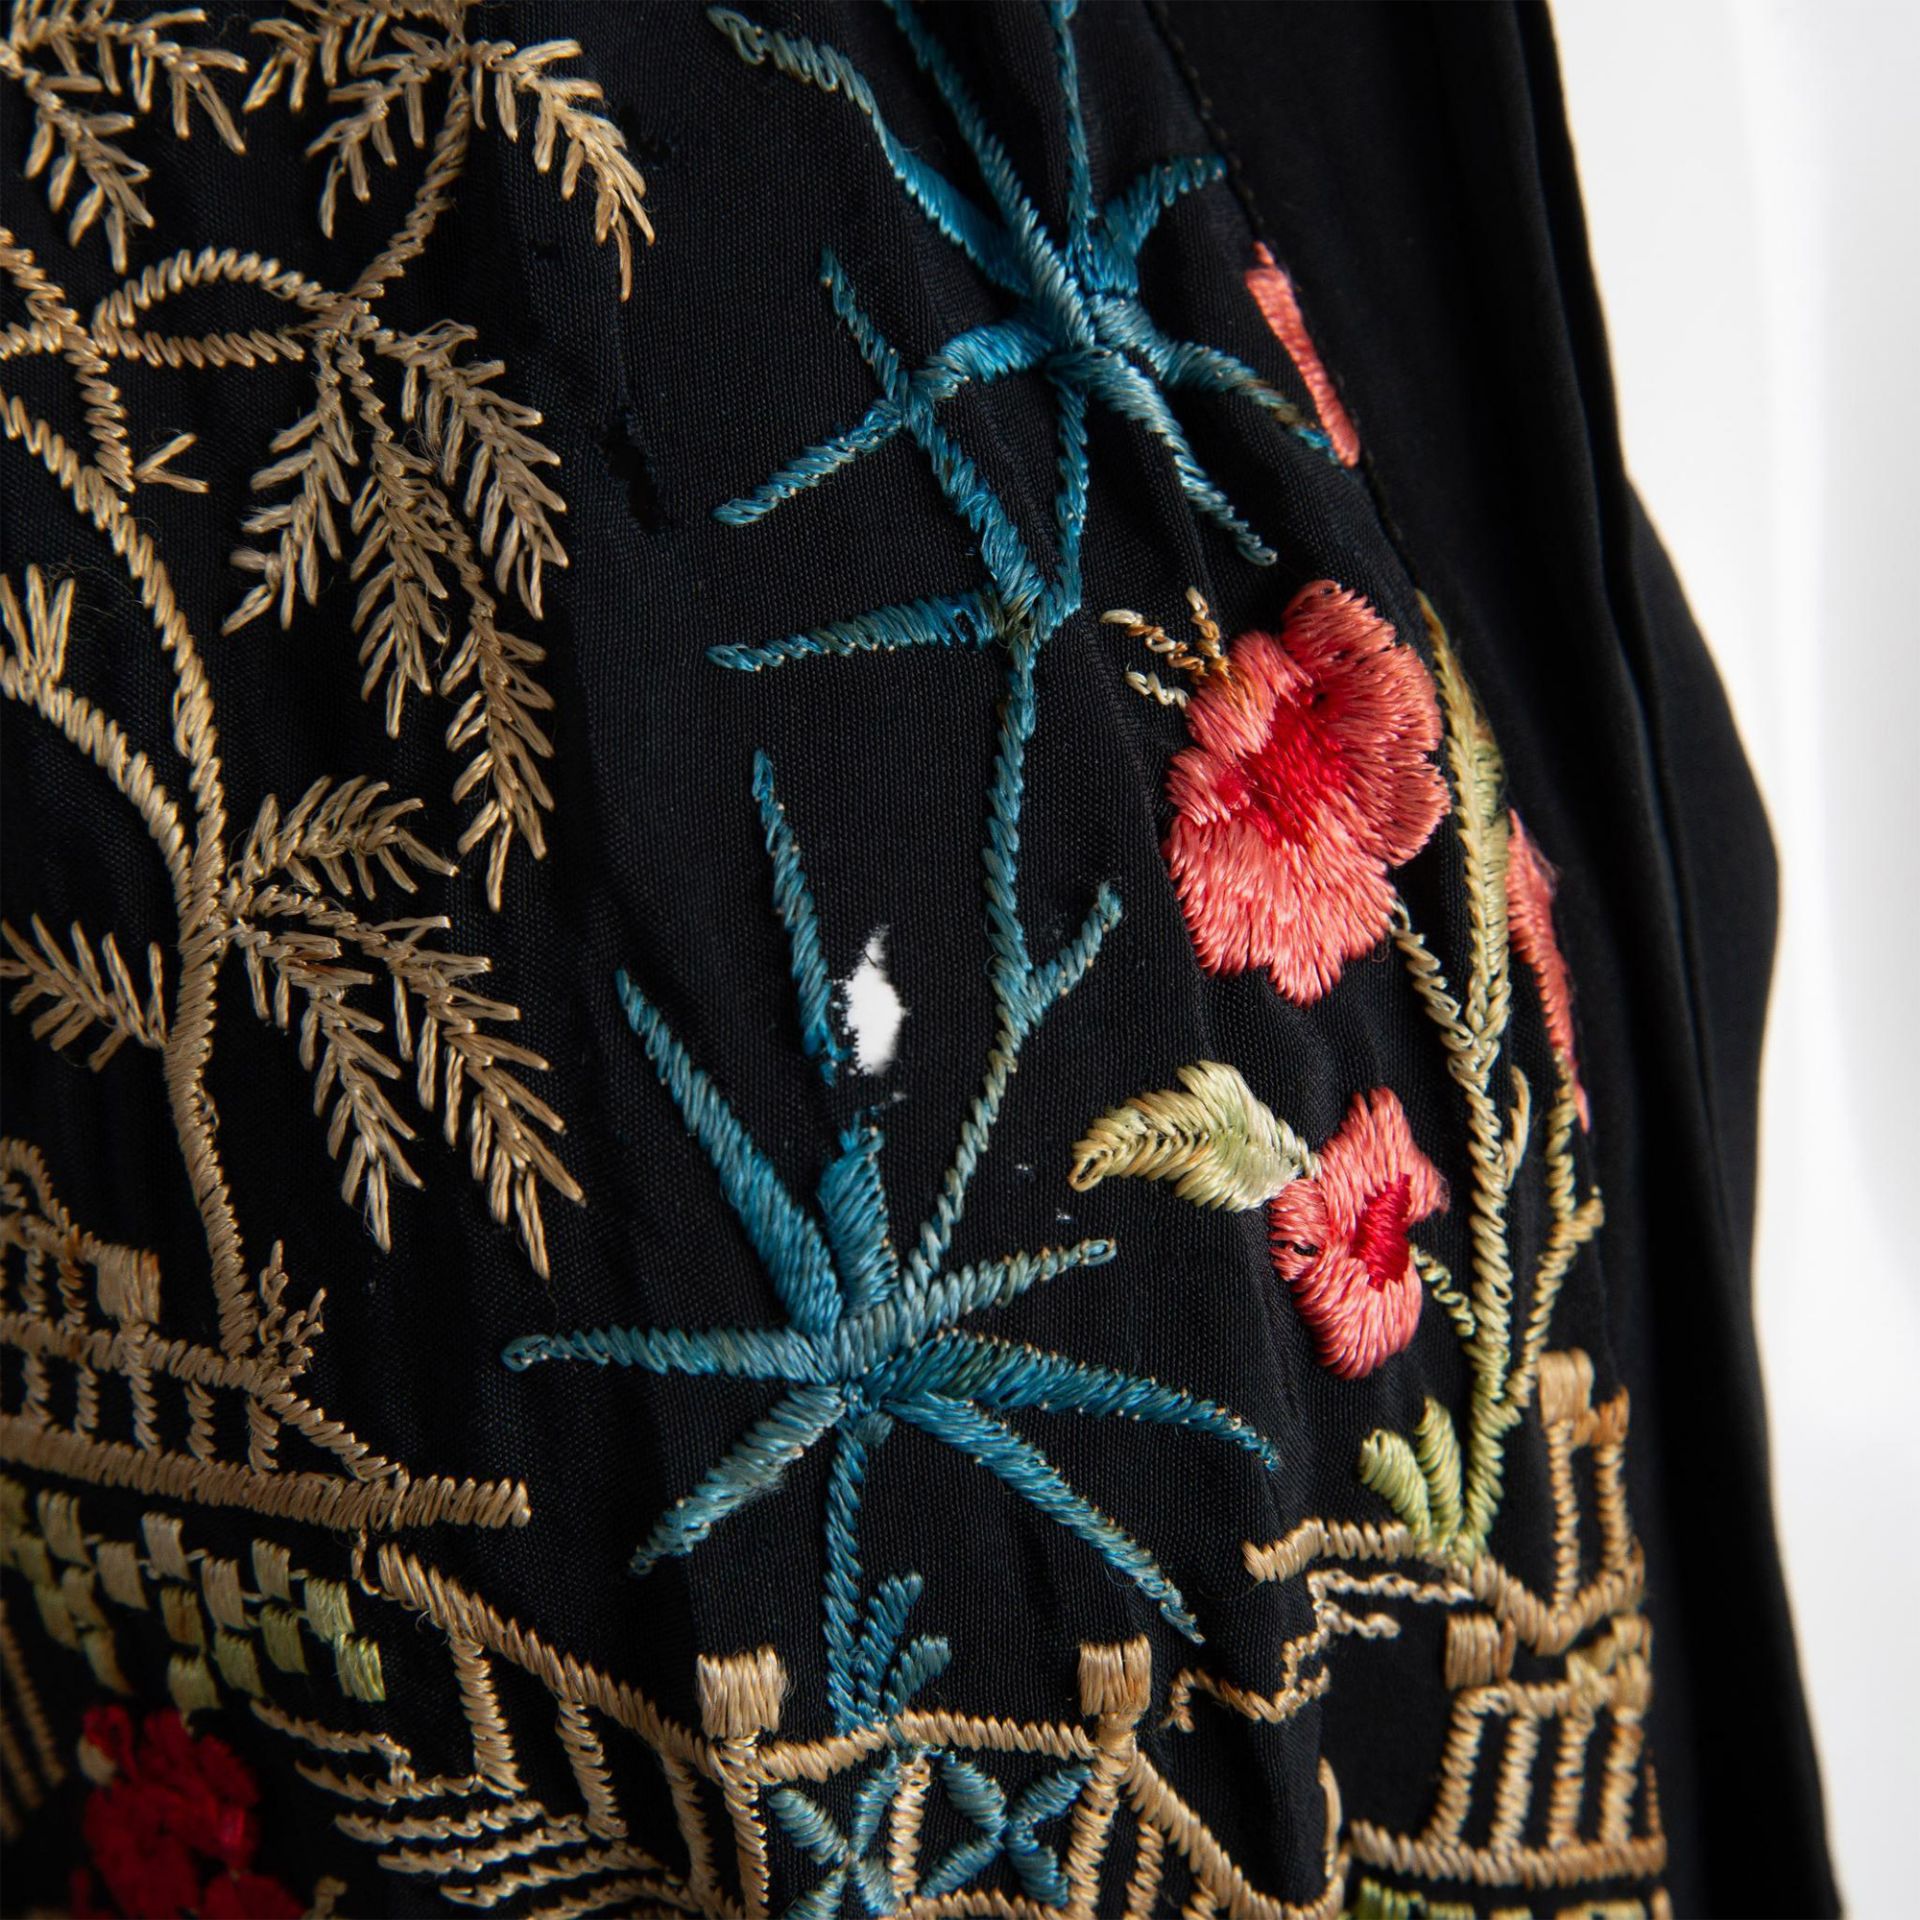 Japanese Embroidered Robe, Size Medium - Image 5 of 8